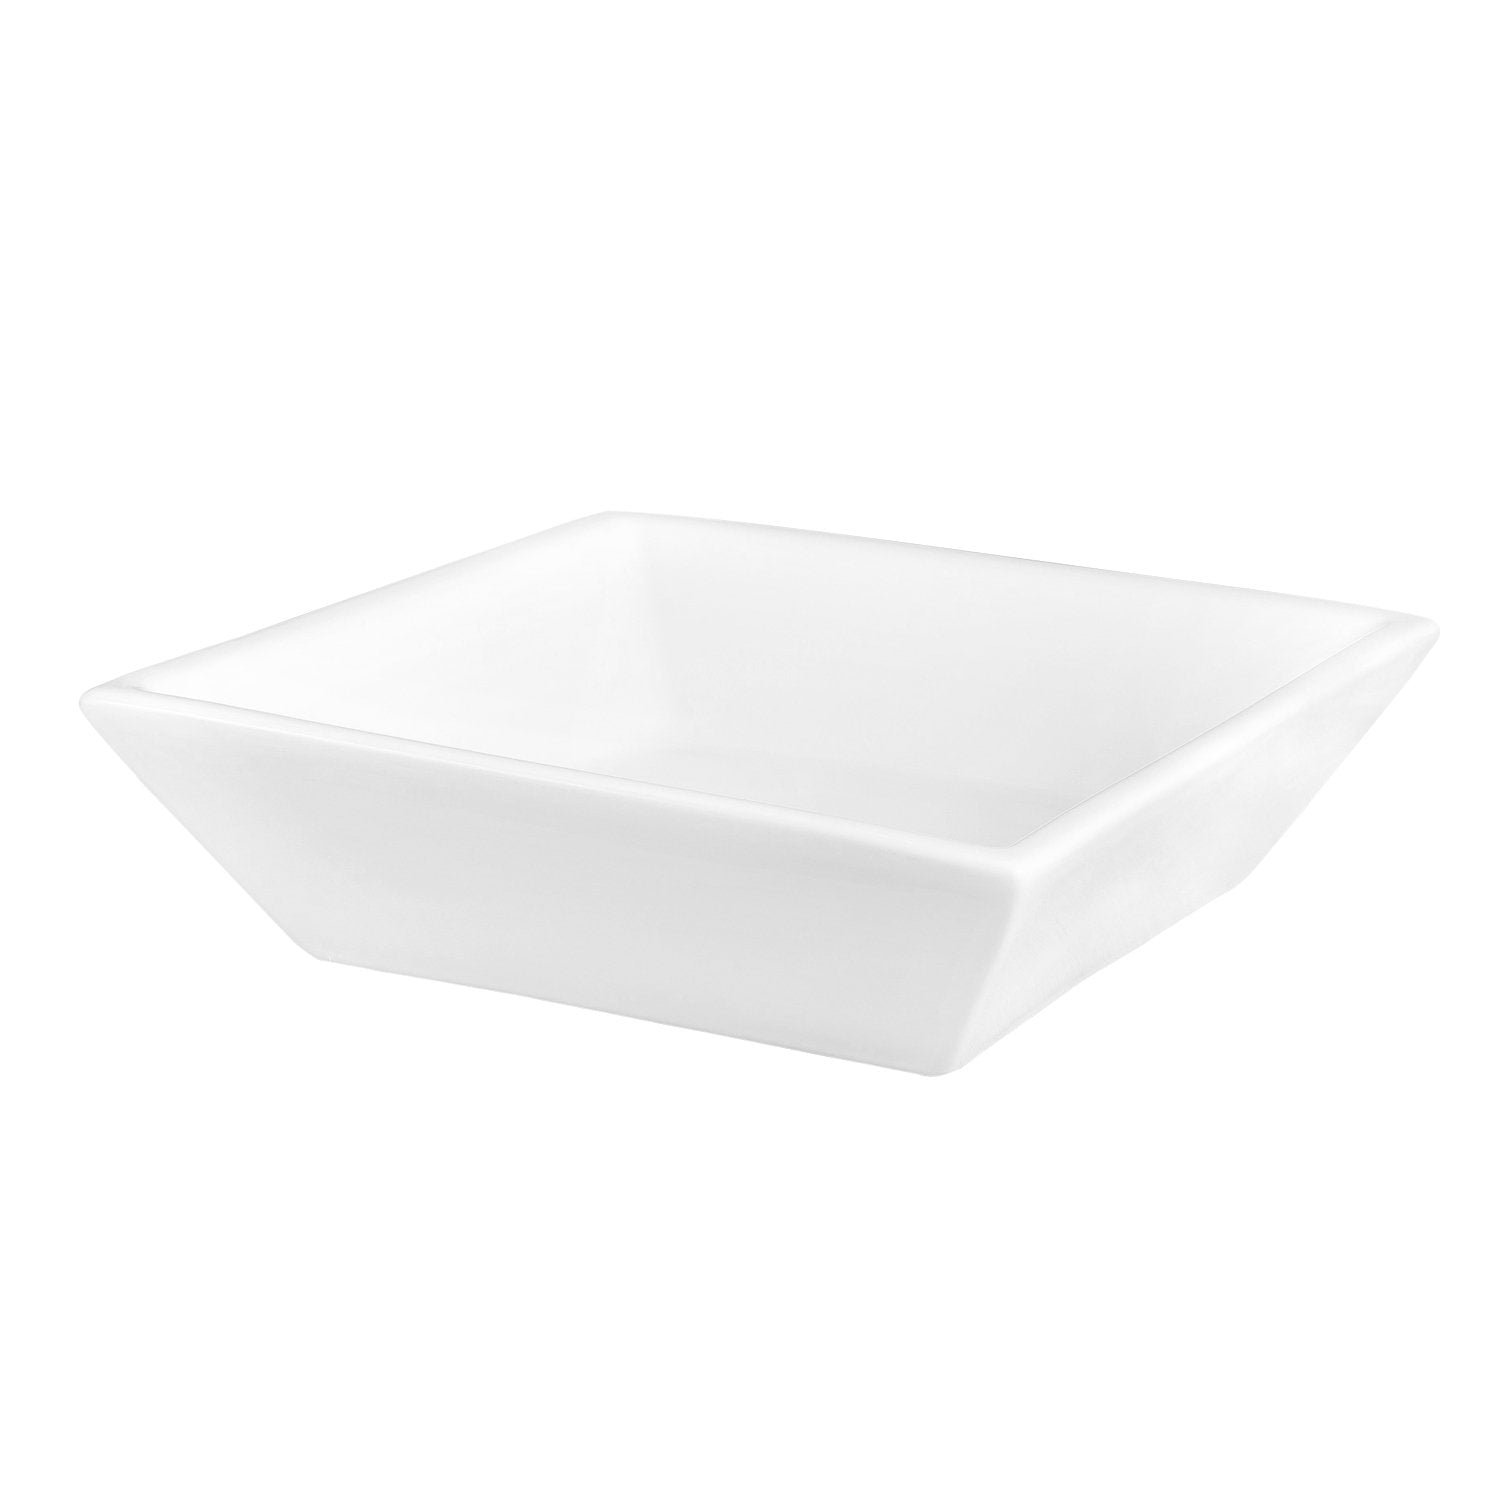 DAX Ceramic Square Single Bowl Bathroom Vessel Sink, White Finish, 16-1/2 x 16-1/2 x 4-3/4 Inches (BSN-230)